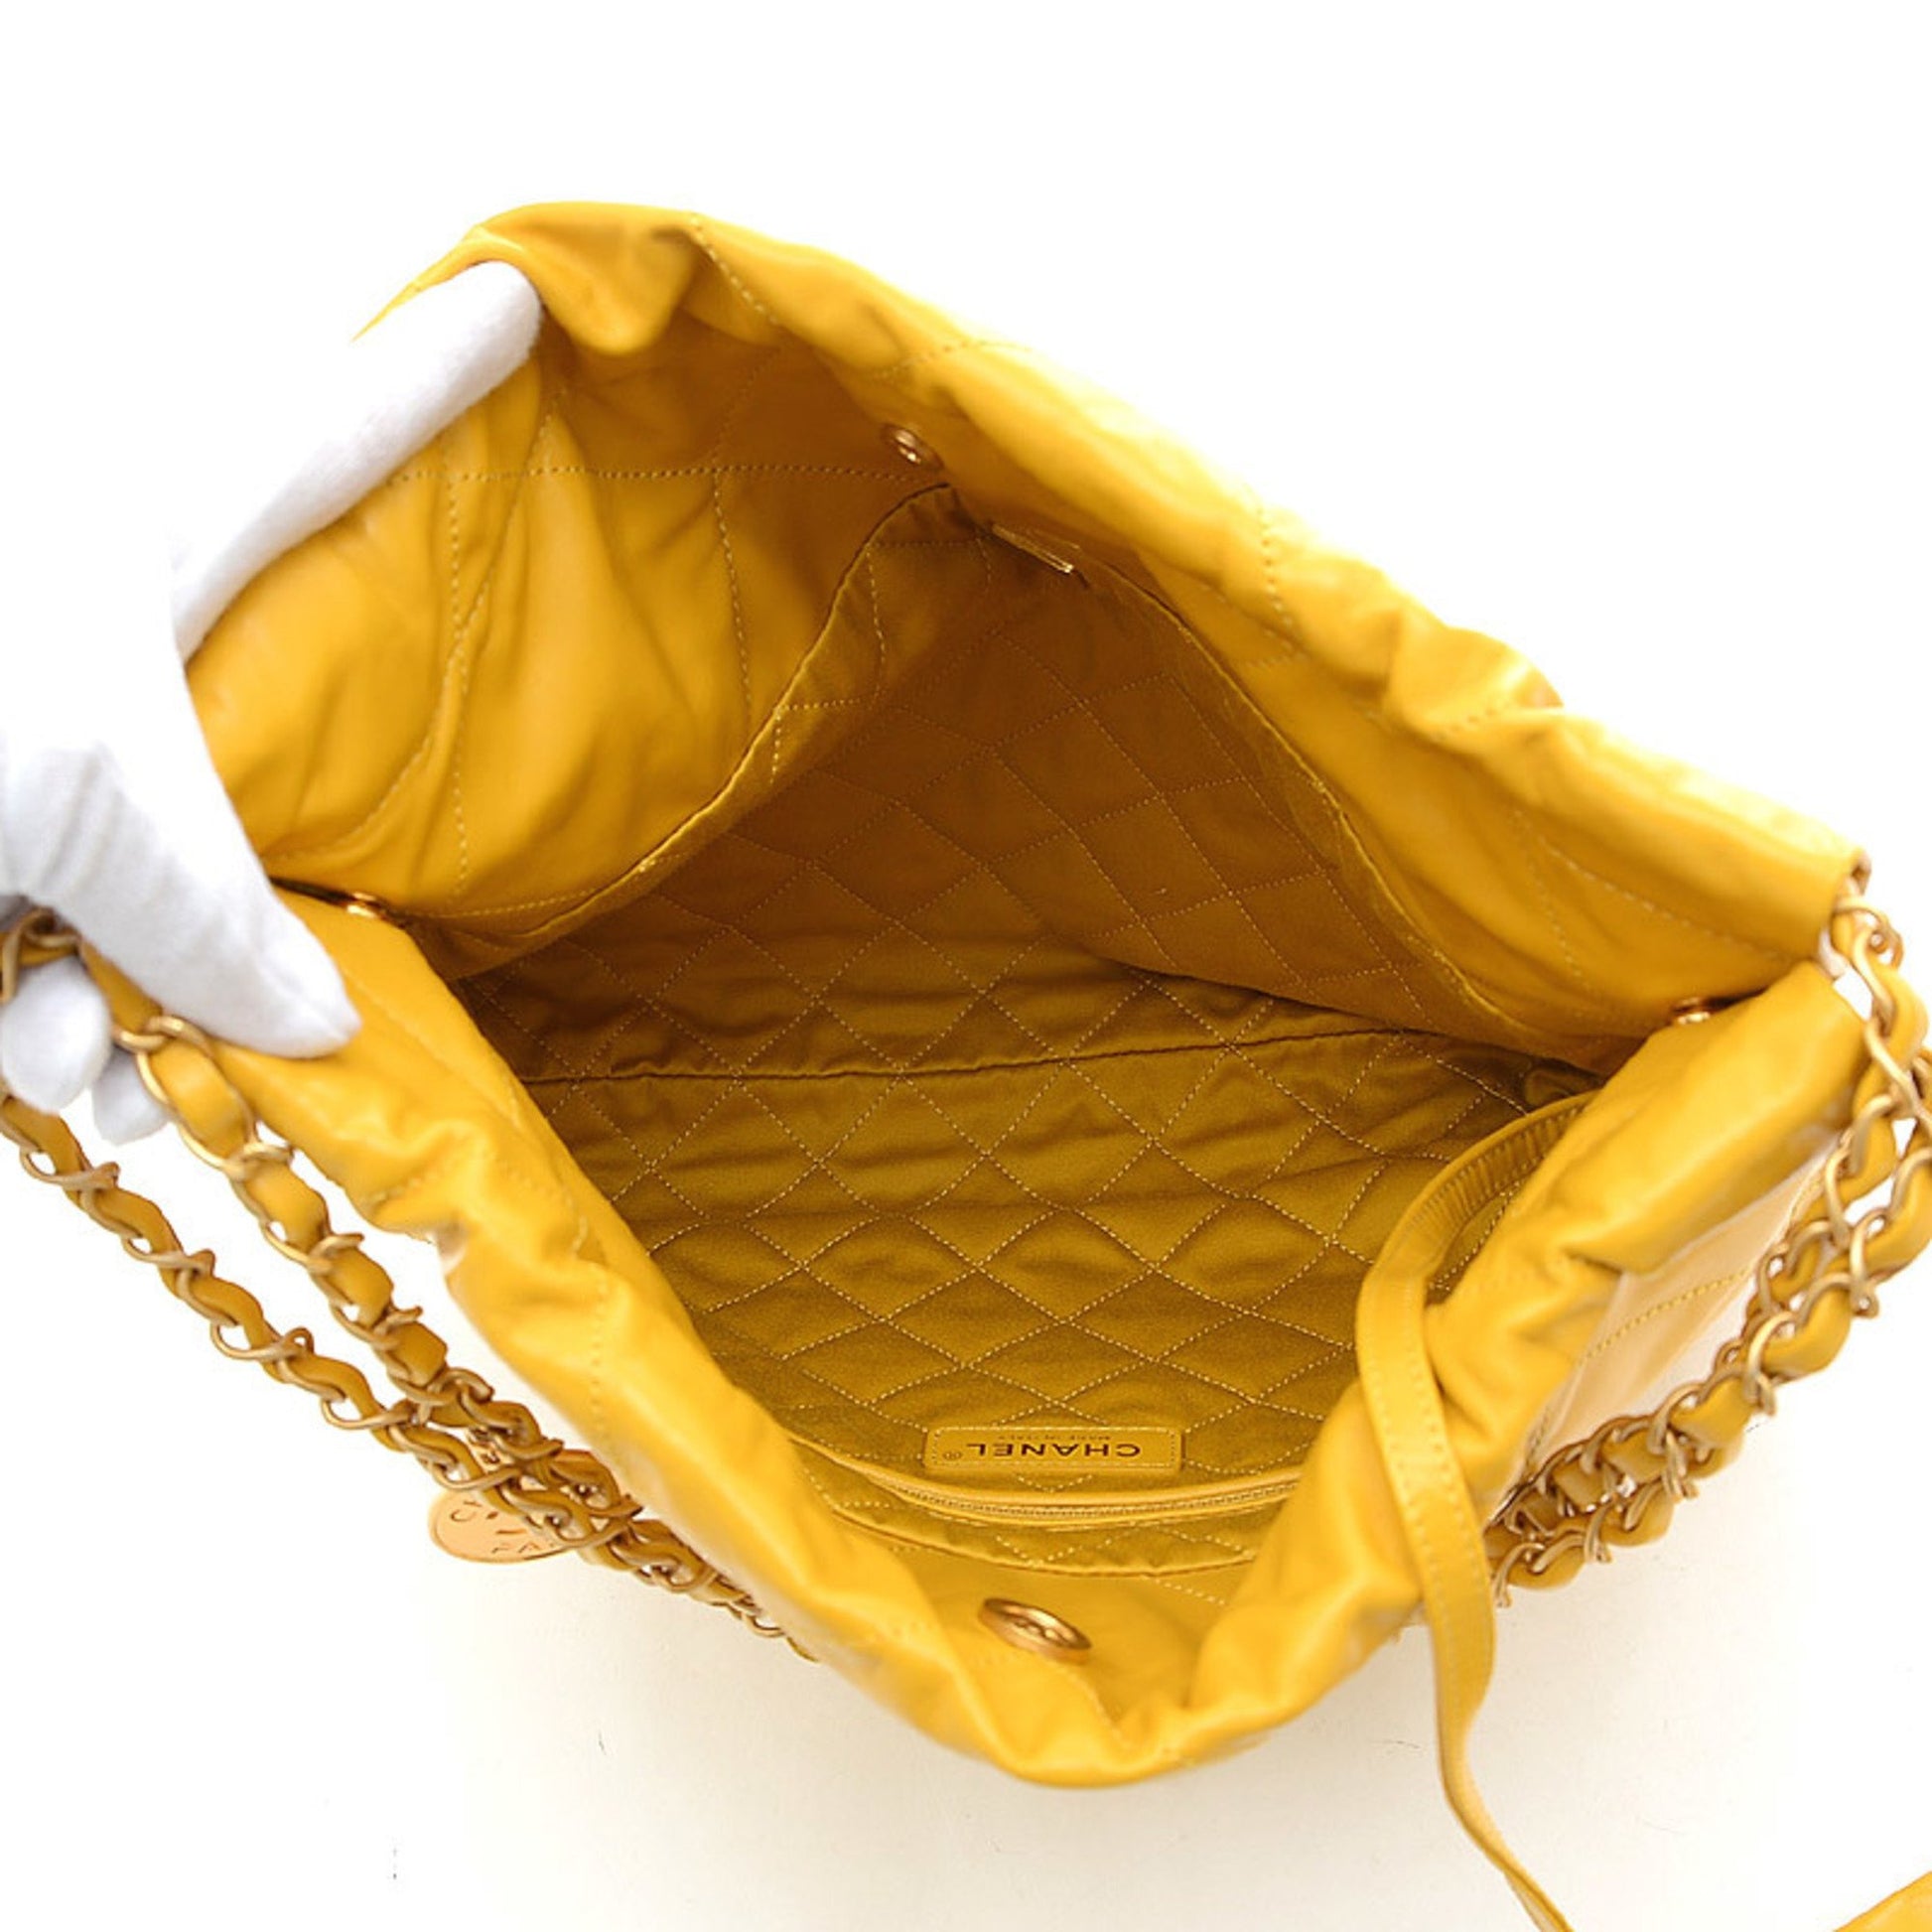 chanel large leather tote handbag